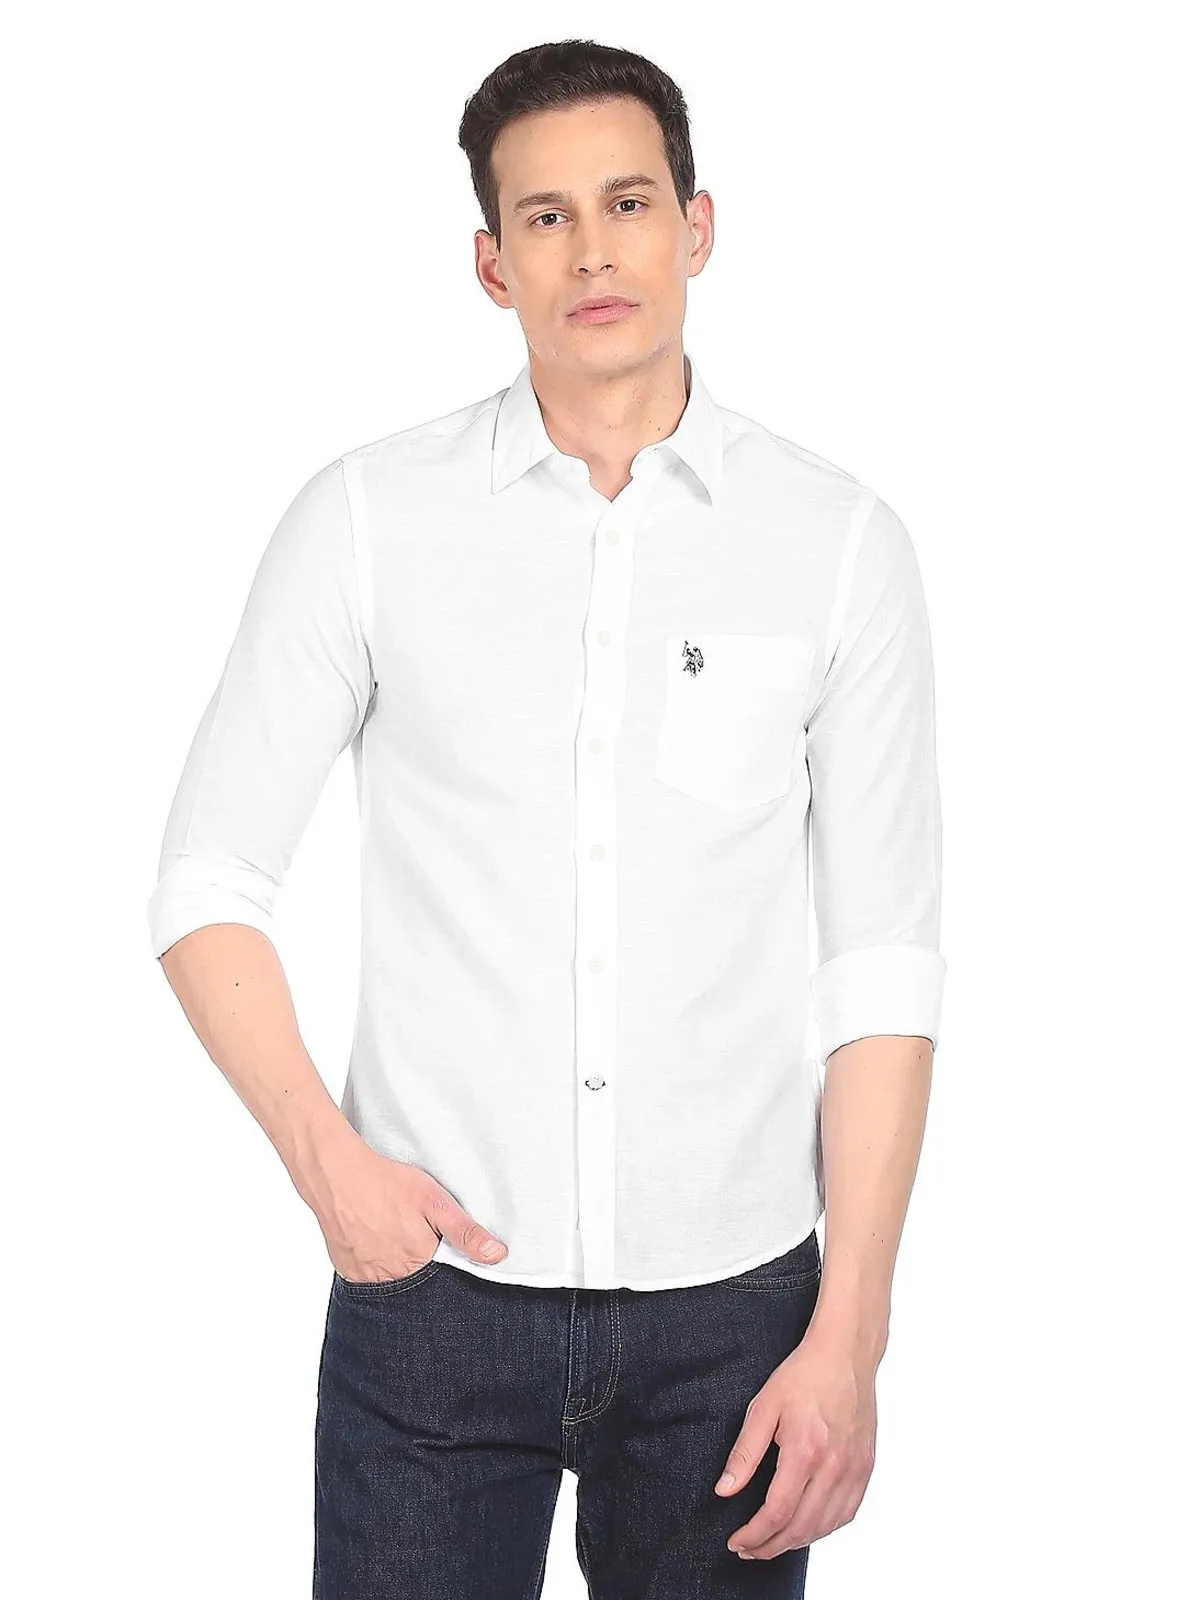 U S POLO ASSN plain white shirt in linen